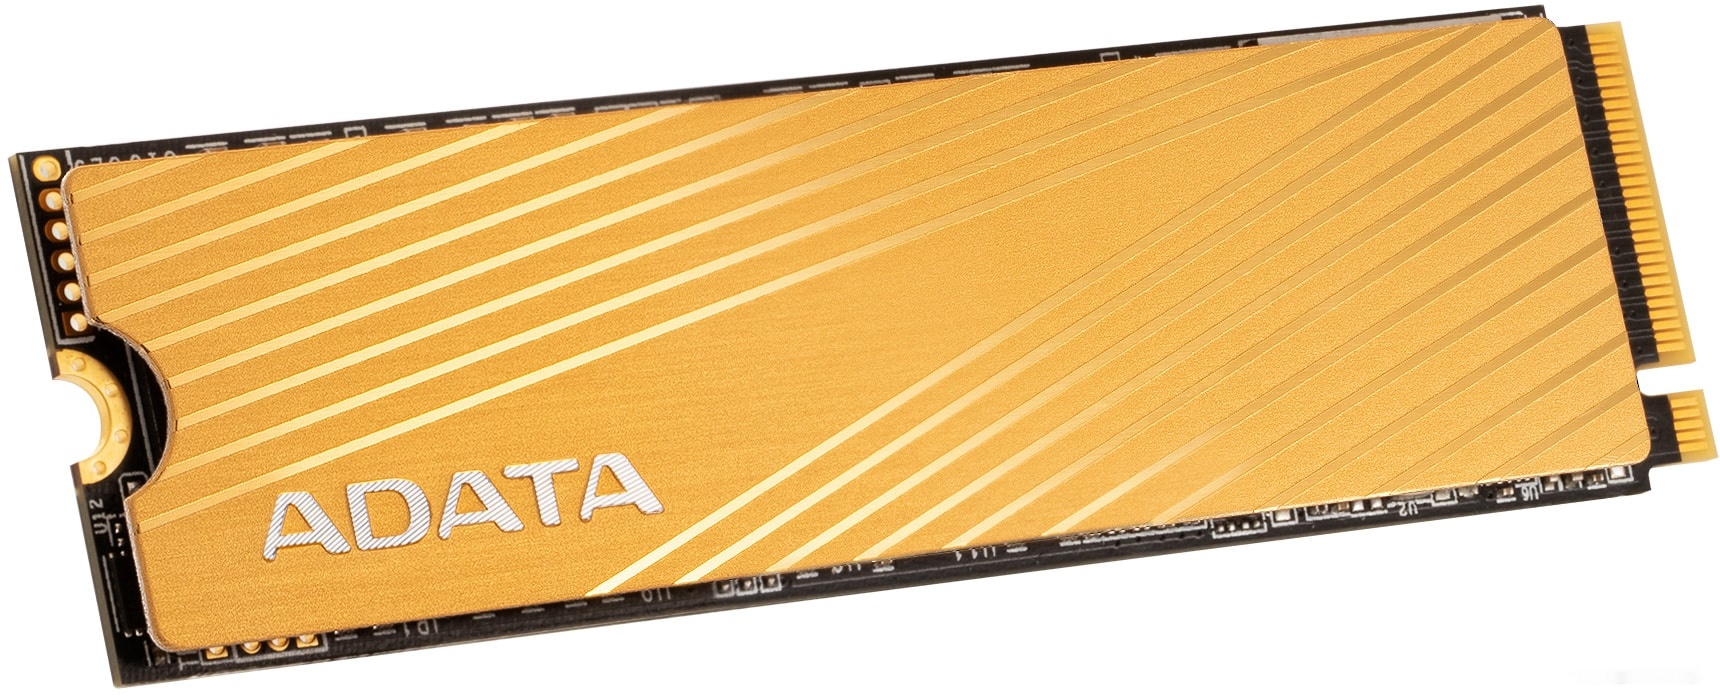 Жесткий диск SSD 512Gb A-Data (AFALCON-512G-C)